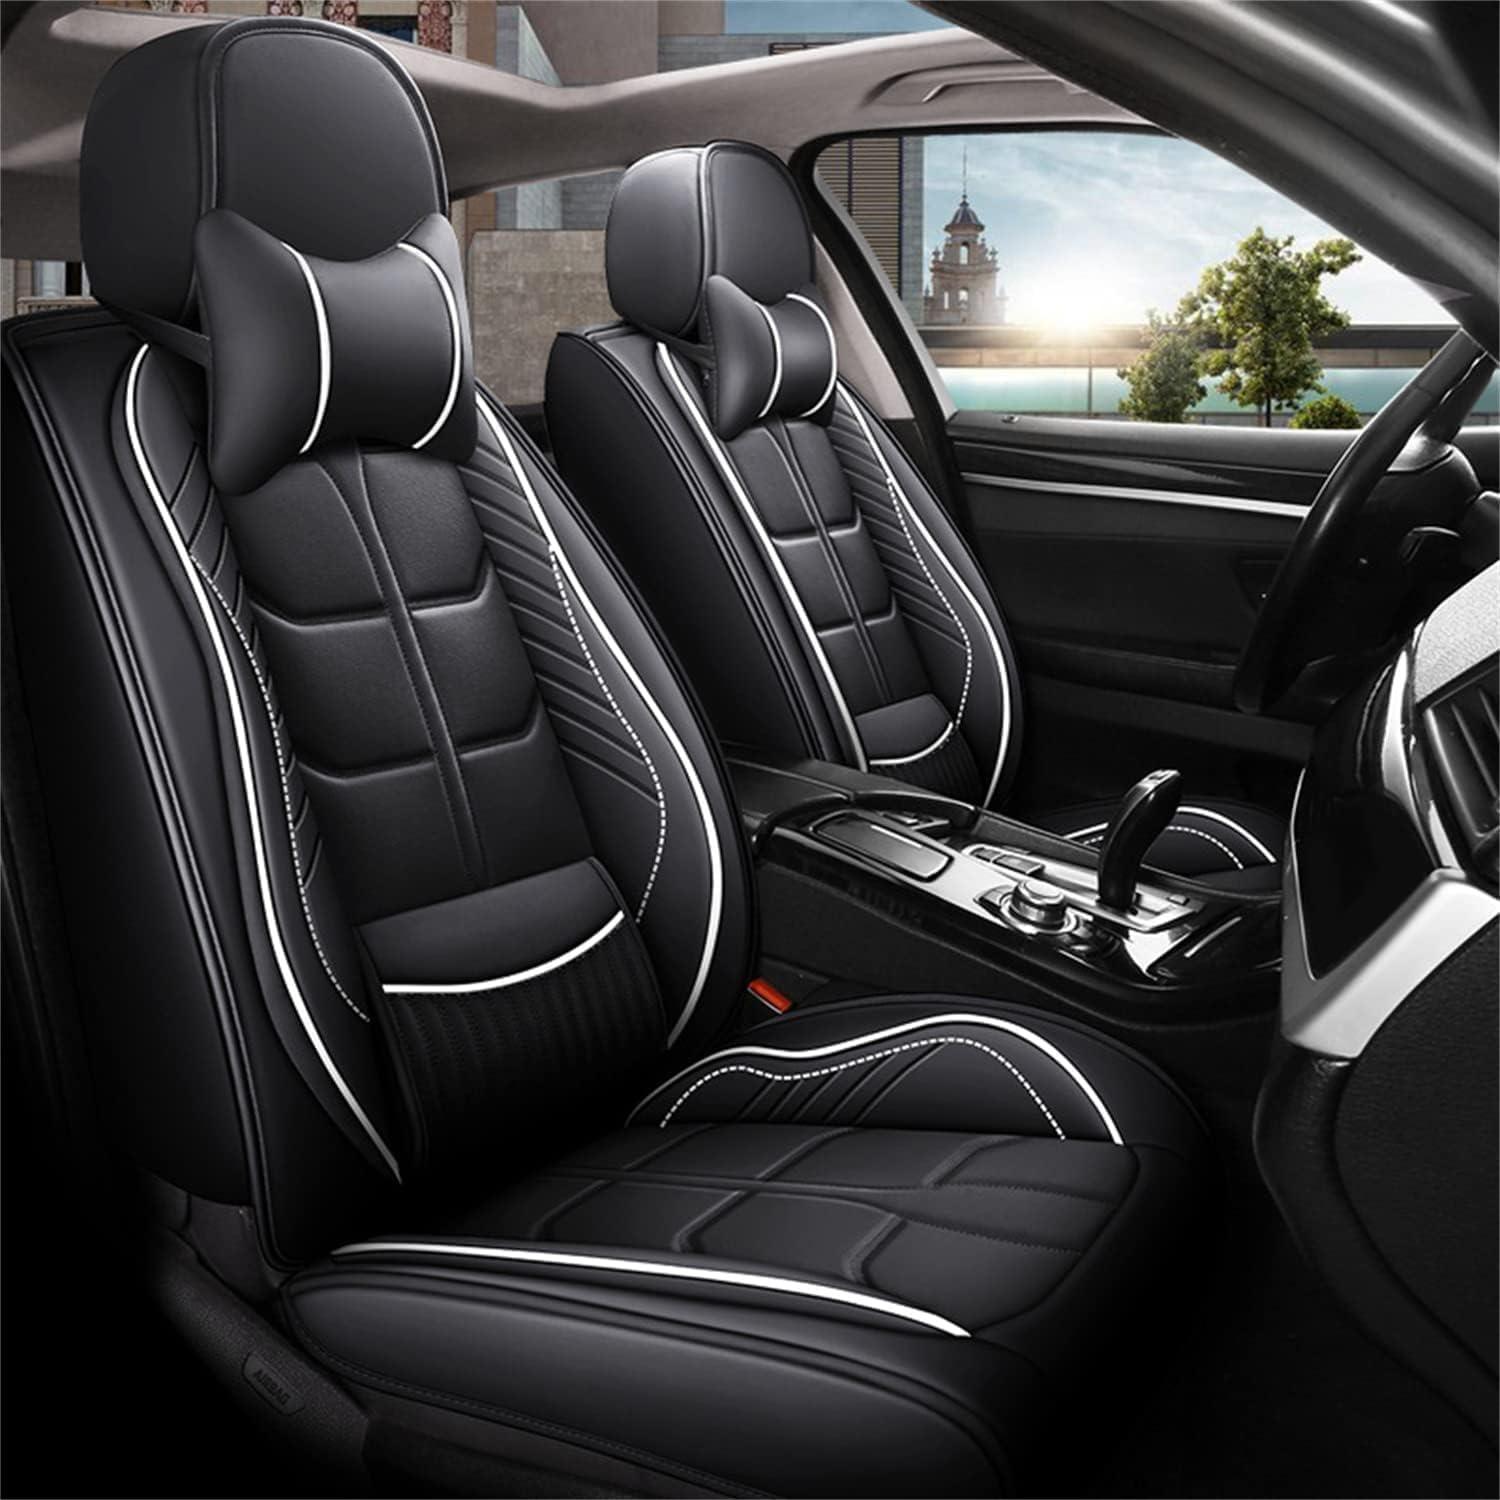 NPORT Auto PU-Leder Sitzbezüge Sets für Hyundai Tucson 3. Generation TL 2015-2020, Komfortabler Dauerhafter Sitzbezug Vordersitze Rücksitze Autositzschoner,A/Blackwhite-Withpillow von NPORT